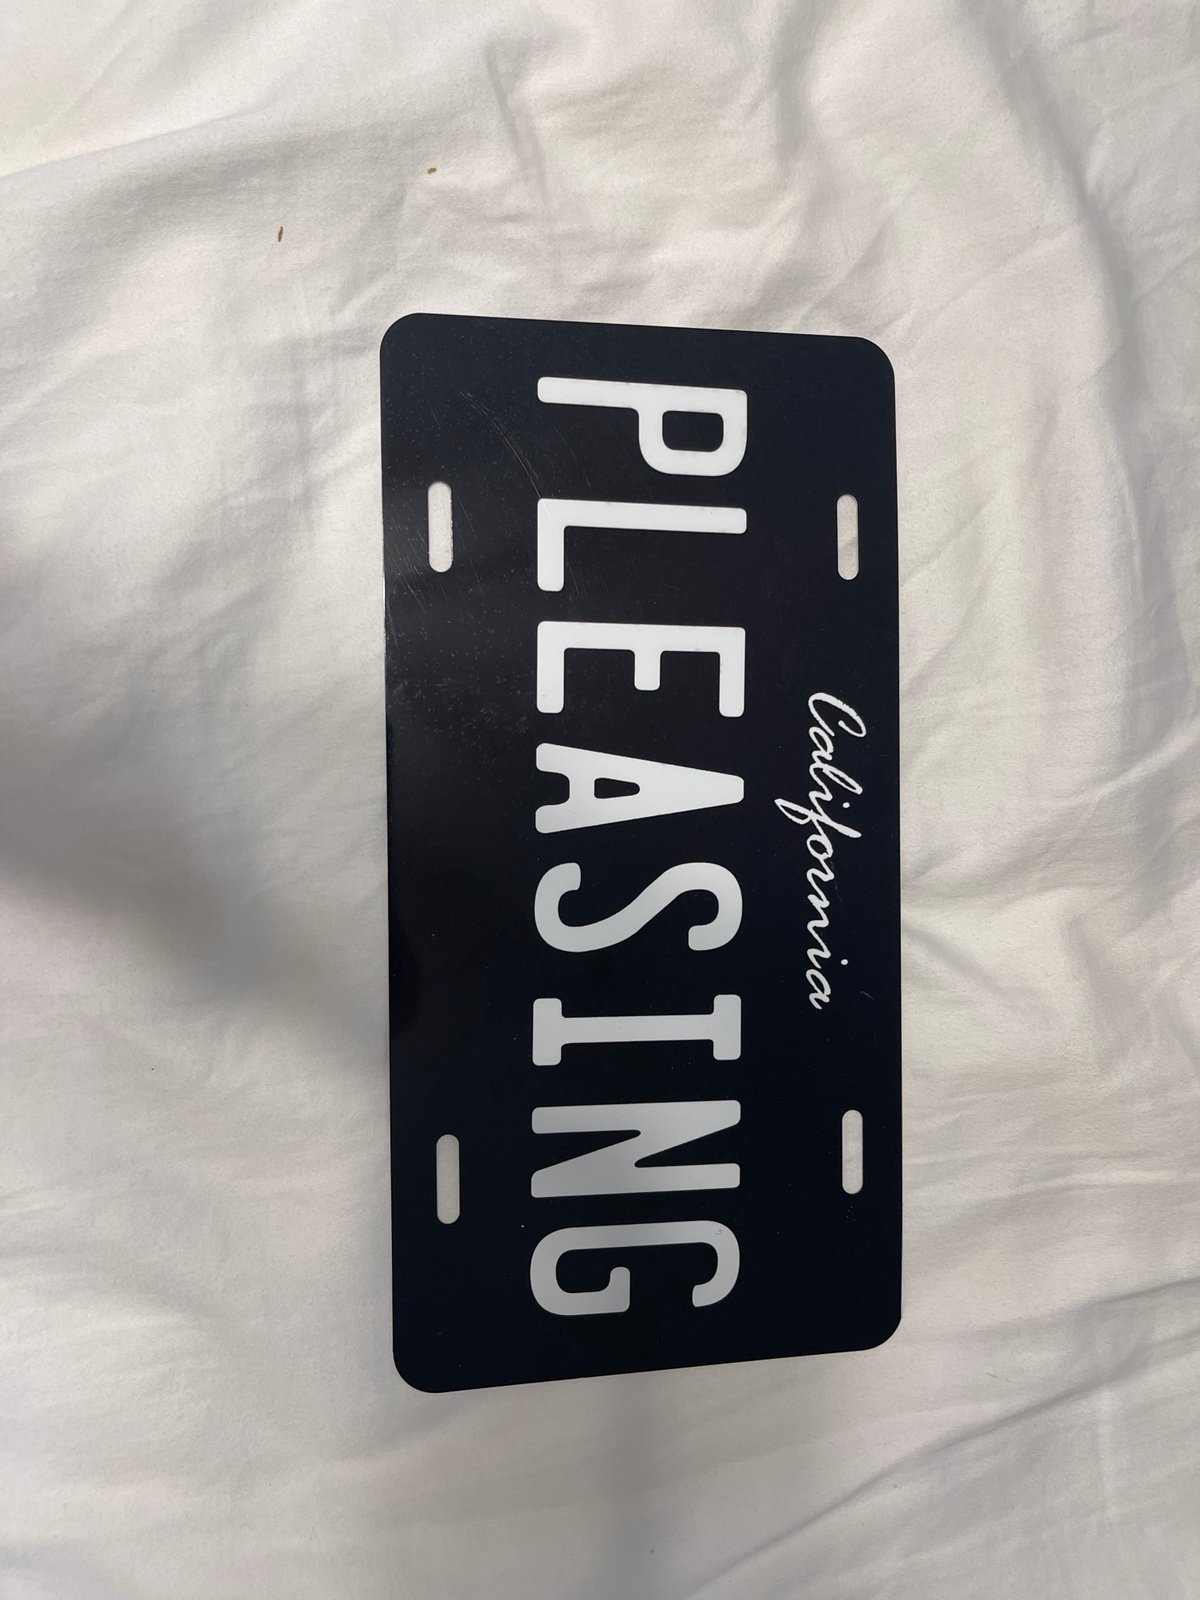 Pleasing License Plate 62Jy9bt6v